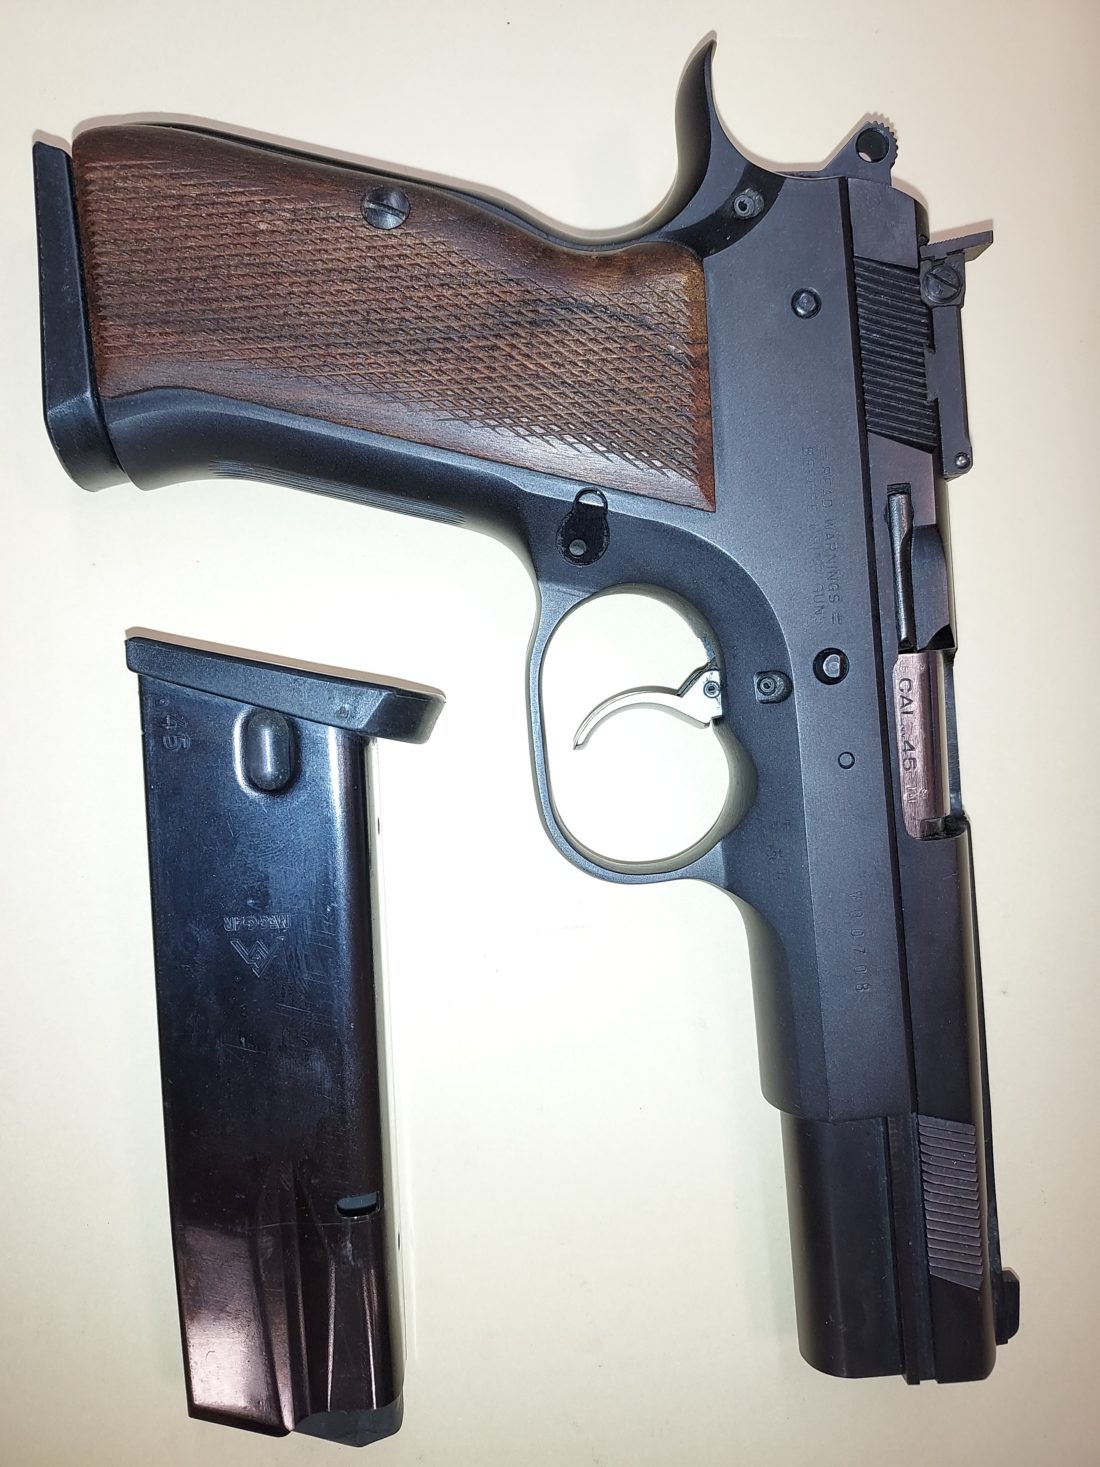 pistolet semi automatique TANFOGLIO modèle IPSC ULTRA calibre .45 ACP